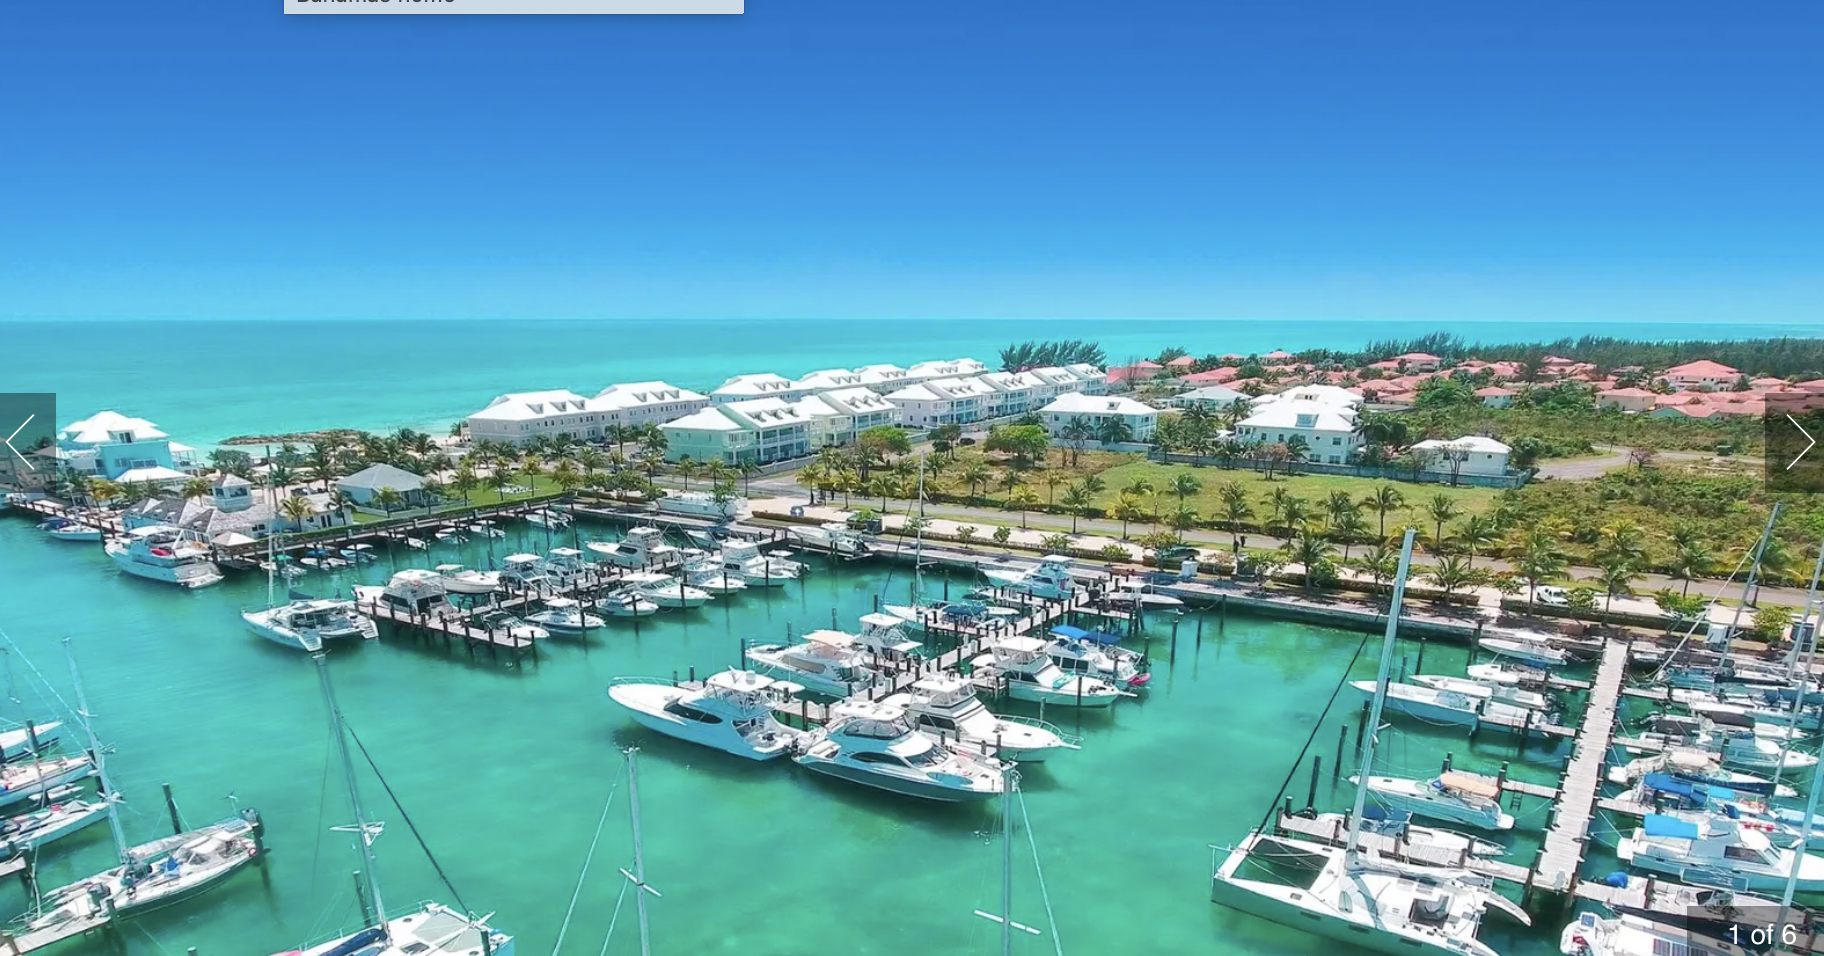 Palm Cay Marina - One Marina-Screenshot 2022 01 30 at 11.07.27